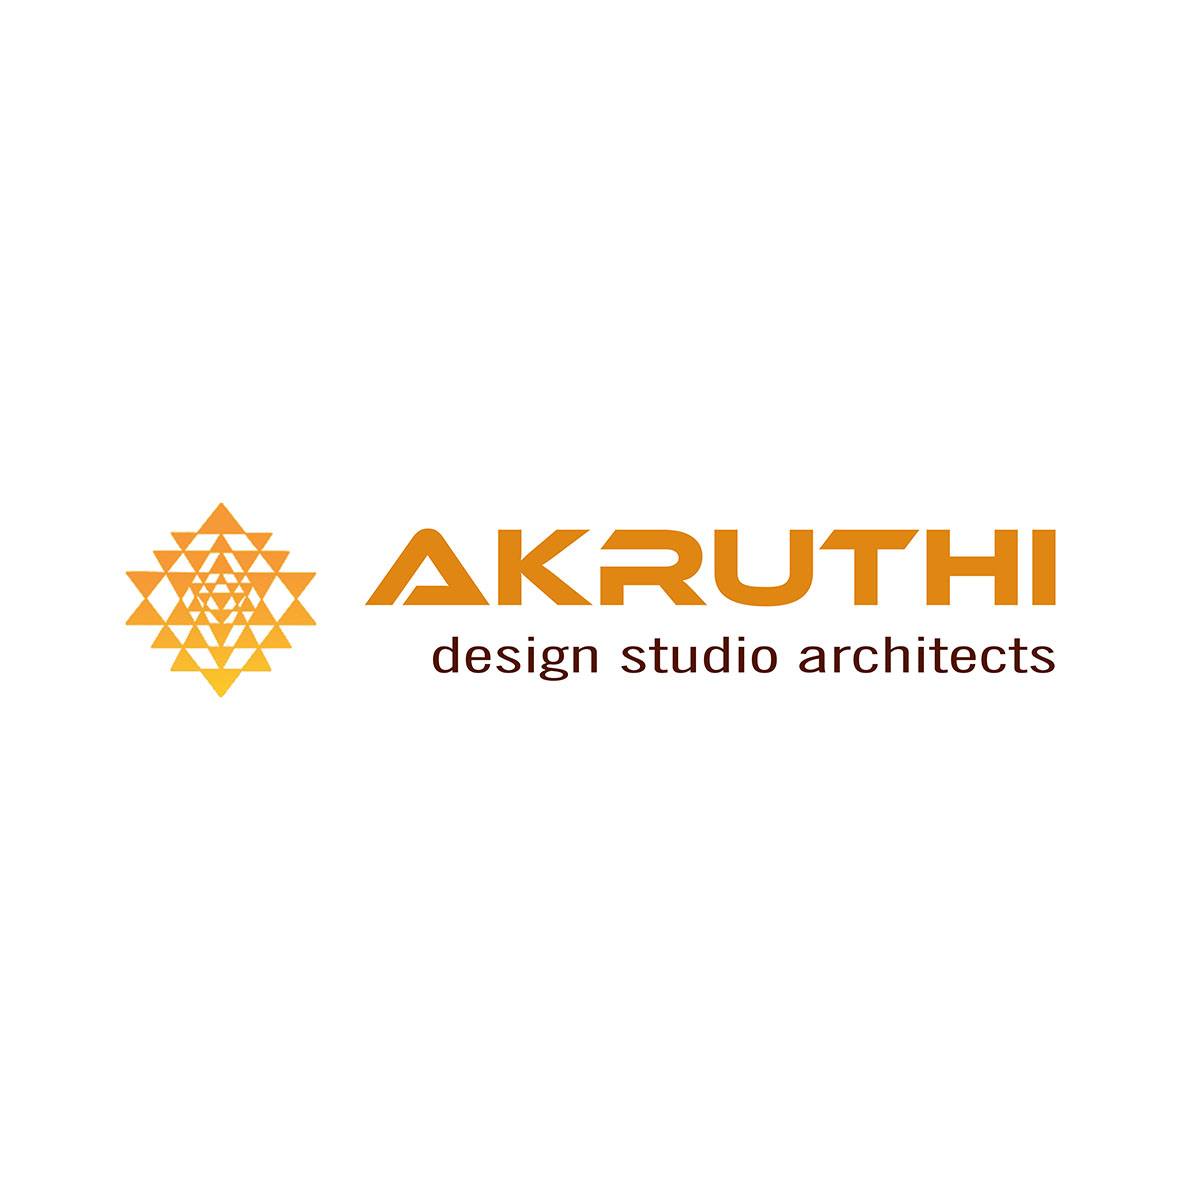 Akruthi Design Studio Architects|Architect|Professional Services